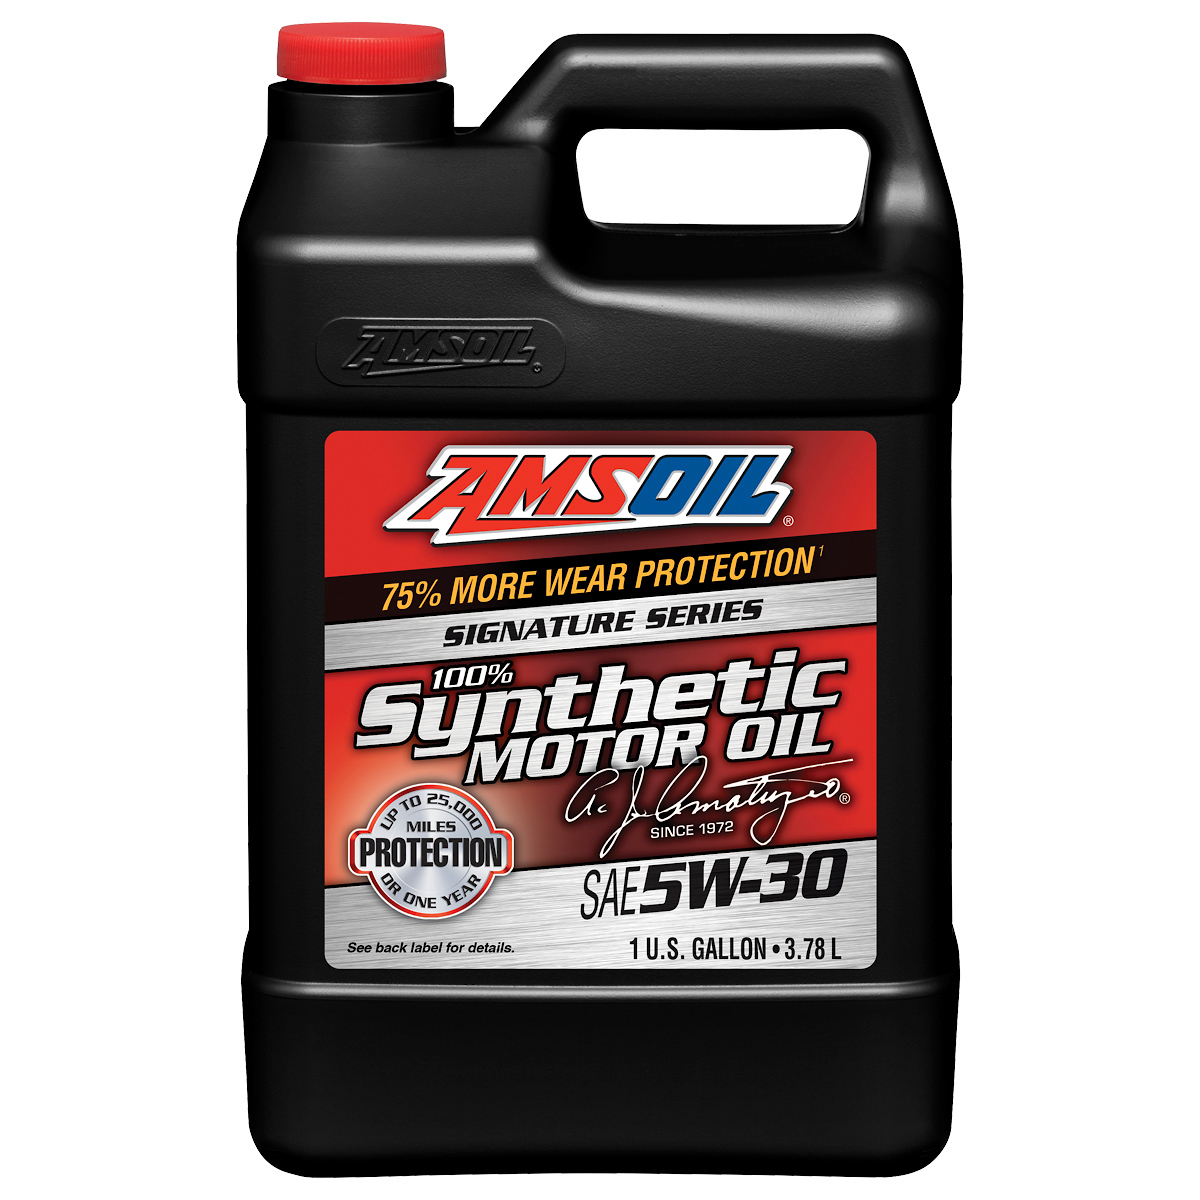 5W-30 synthetic motor oil Gallon jug